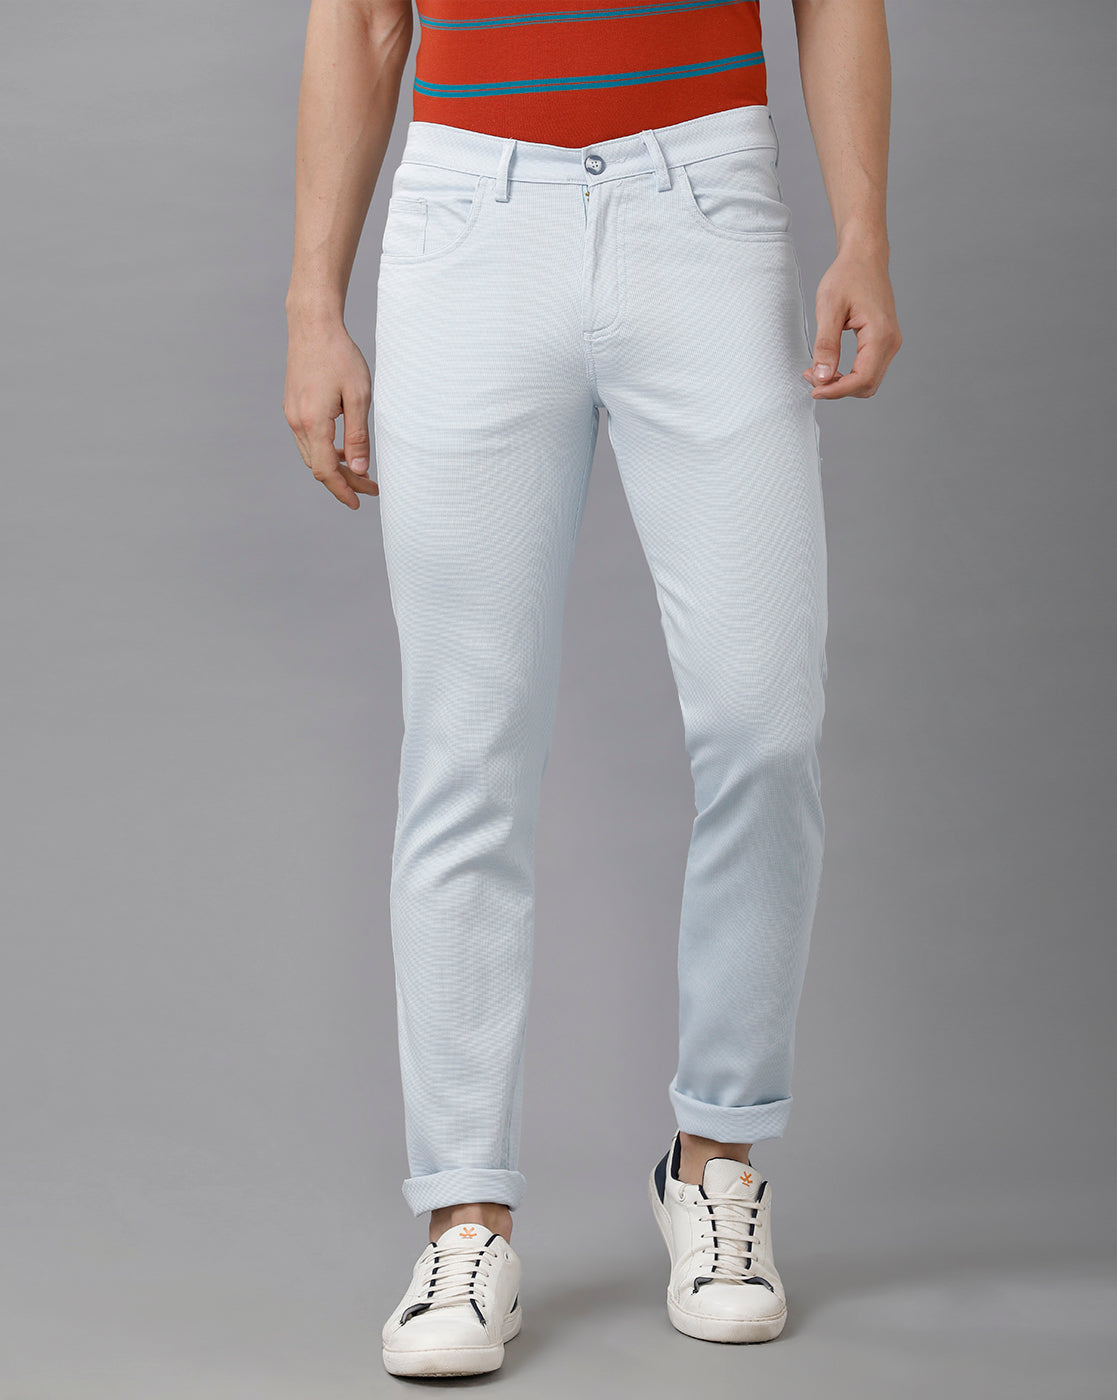 CP BRO Men's Cotton Solid Slim Fit Blue Color Trousers | Tbn2 14 A